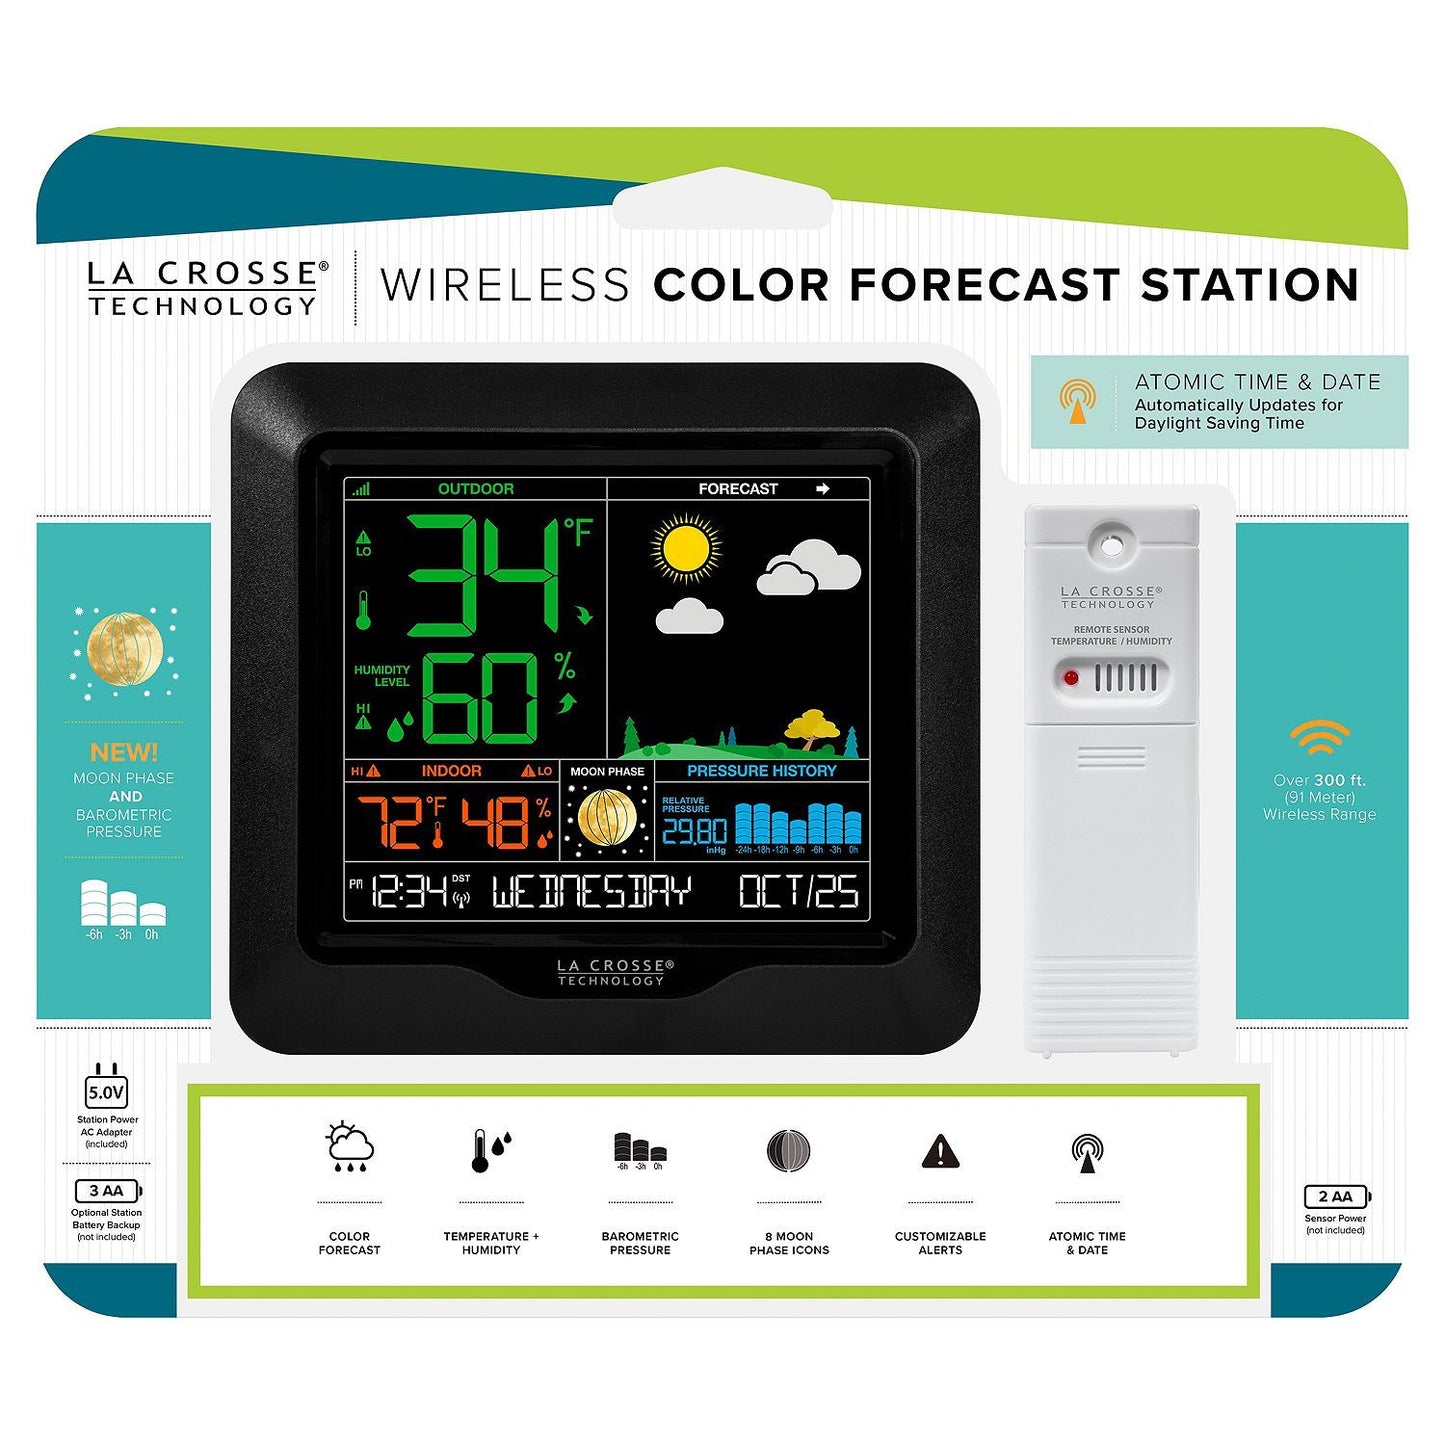 La Crosse Technology Wireless Color Forecast Station